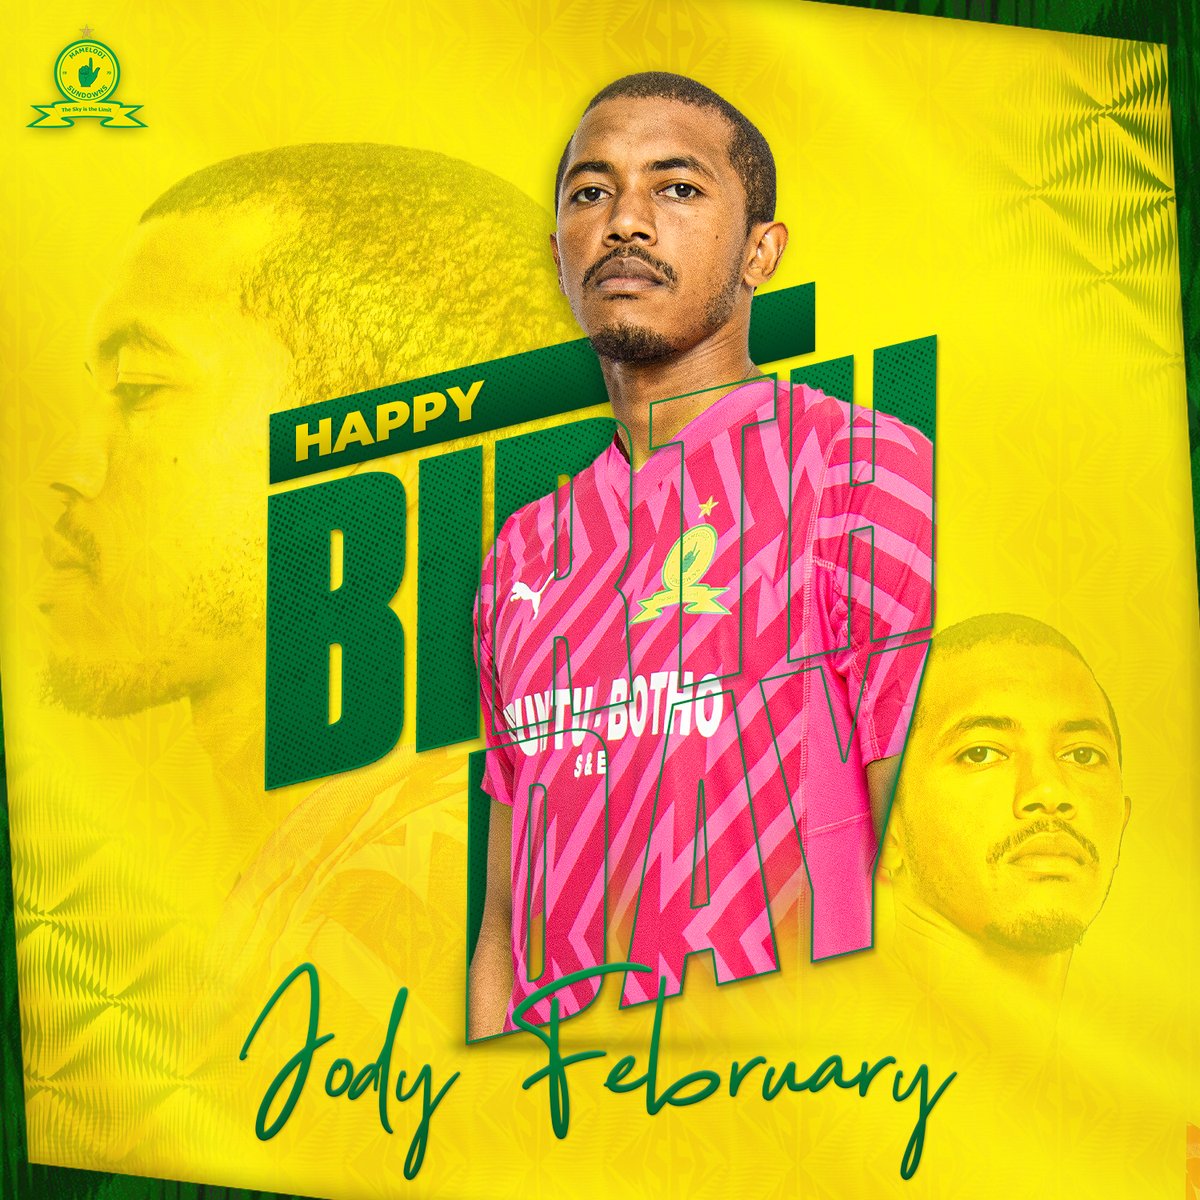 Masandawana, let's send our best birthday wishes to Jody February on his special day today! 🎂 #Sundowns #HappyBirthdayJody